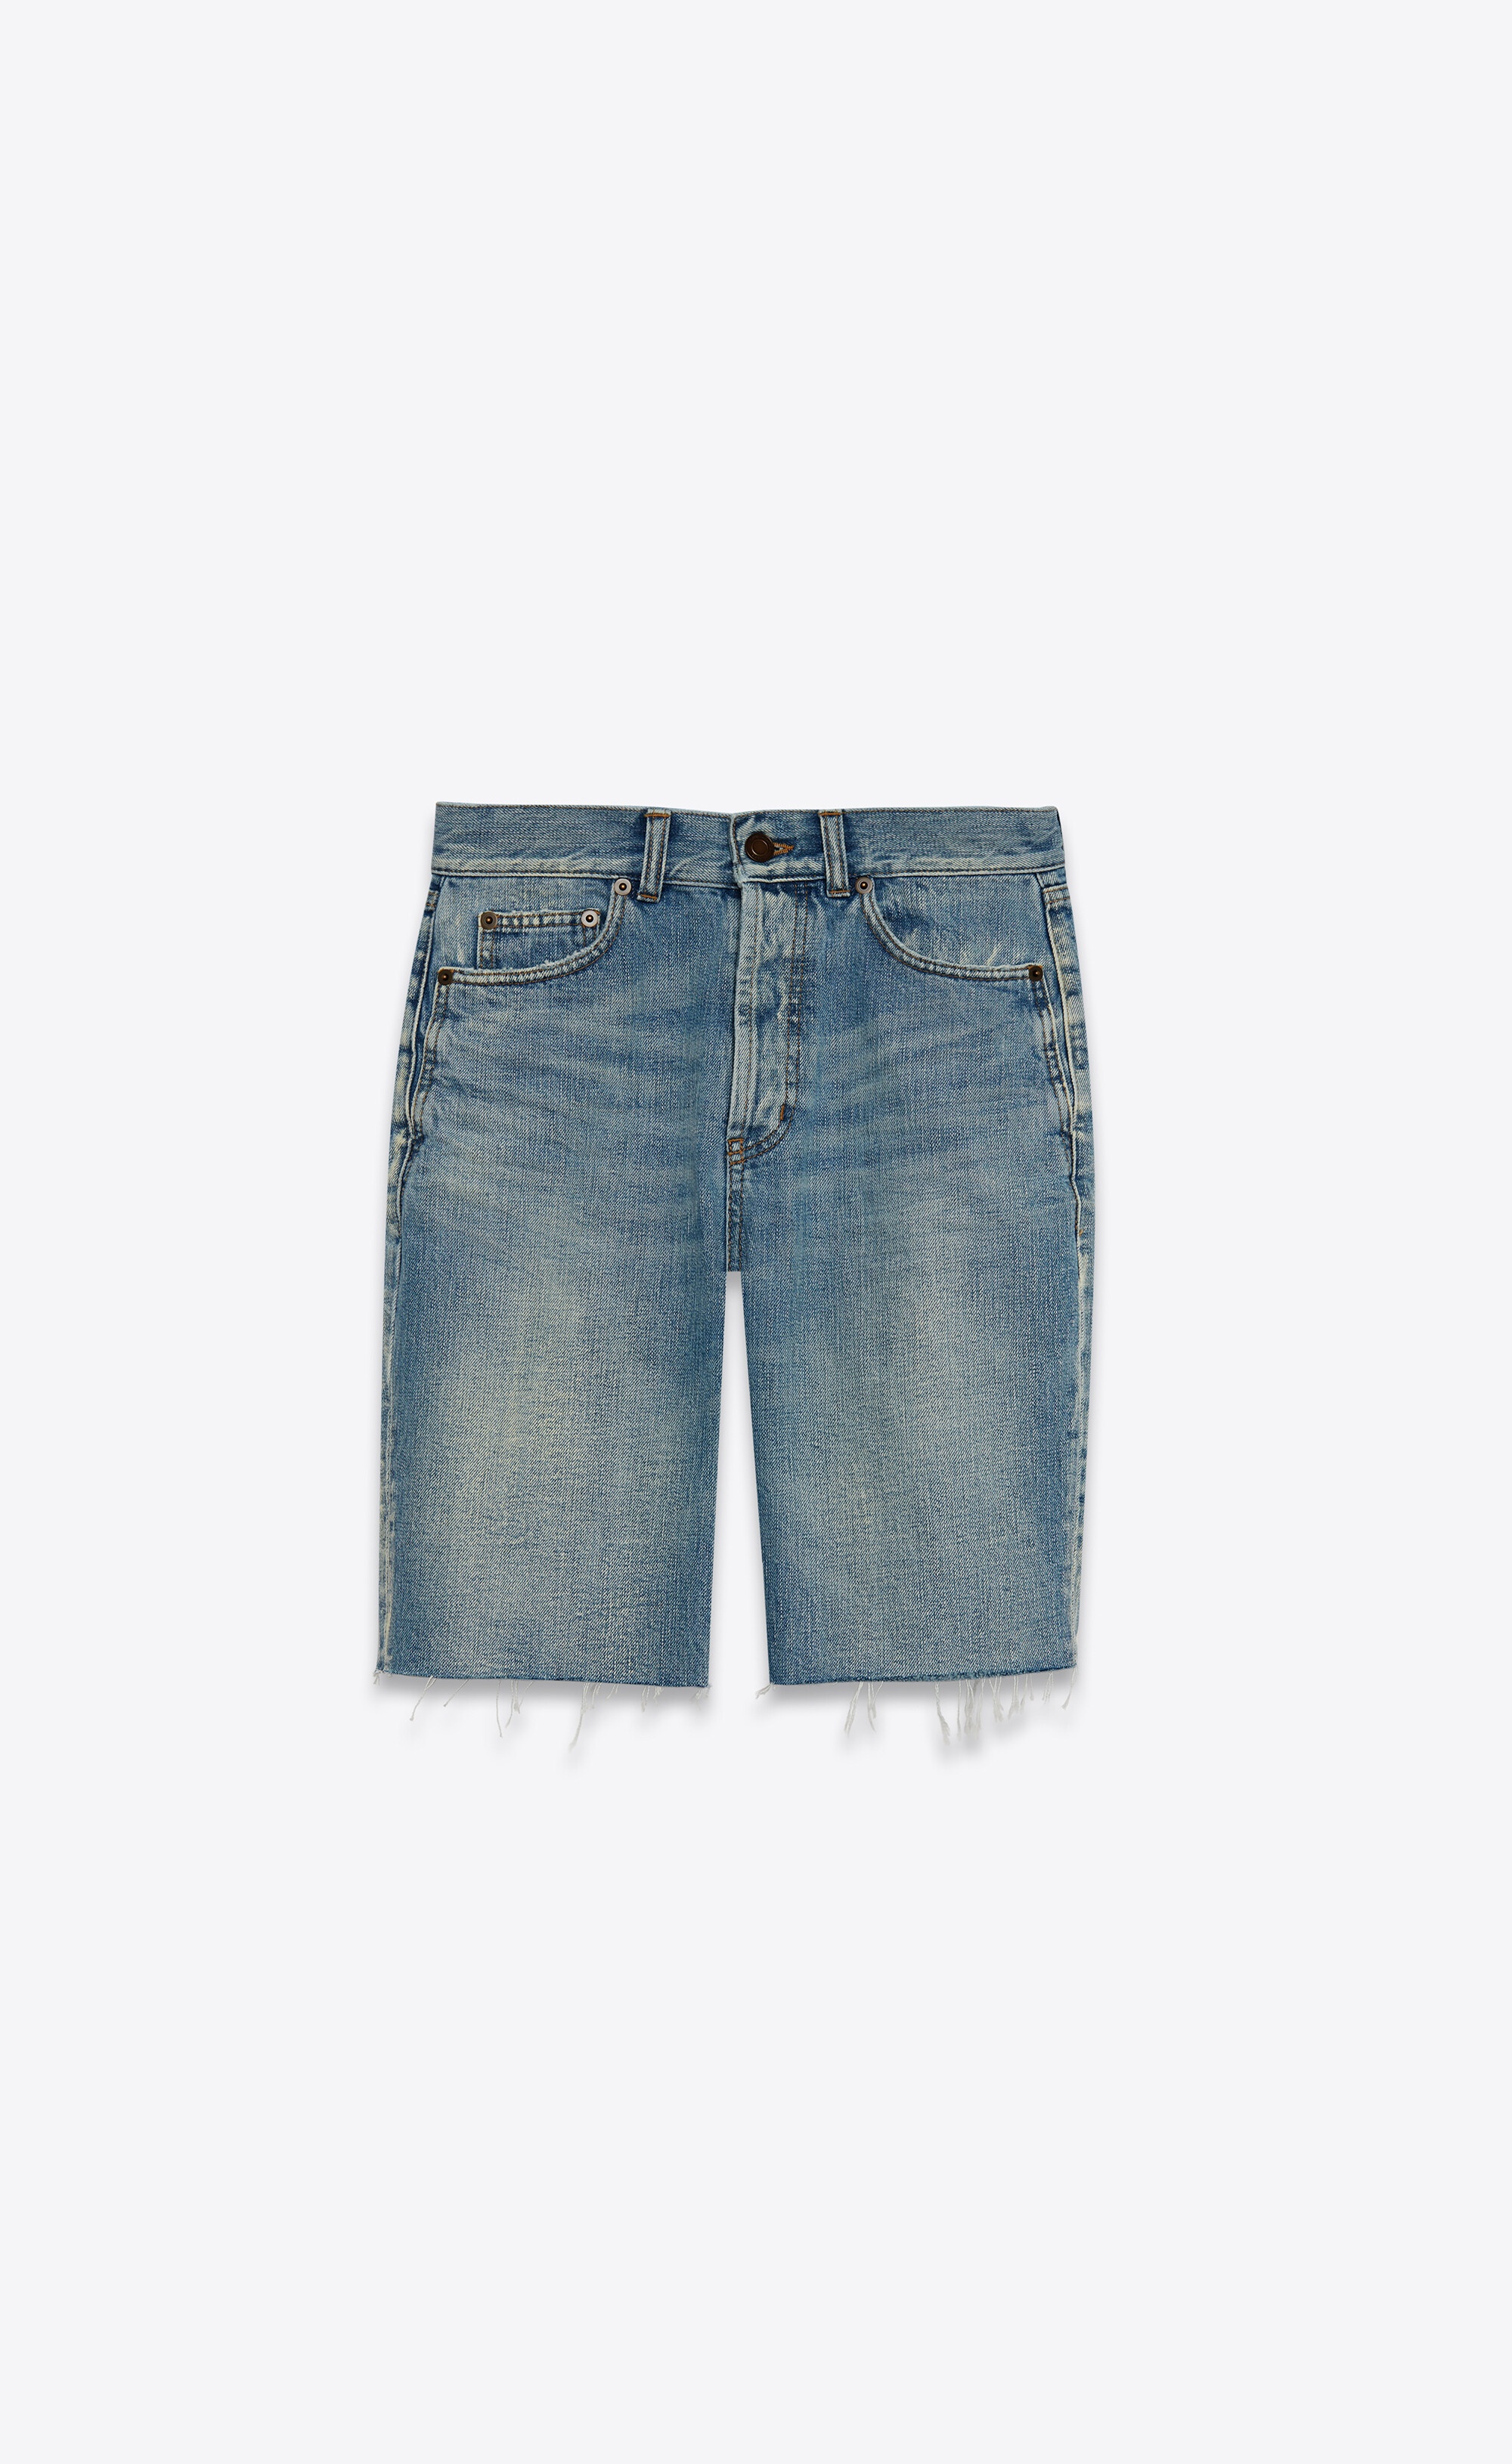 raw-edge shorts in light winter blue denim - 1